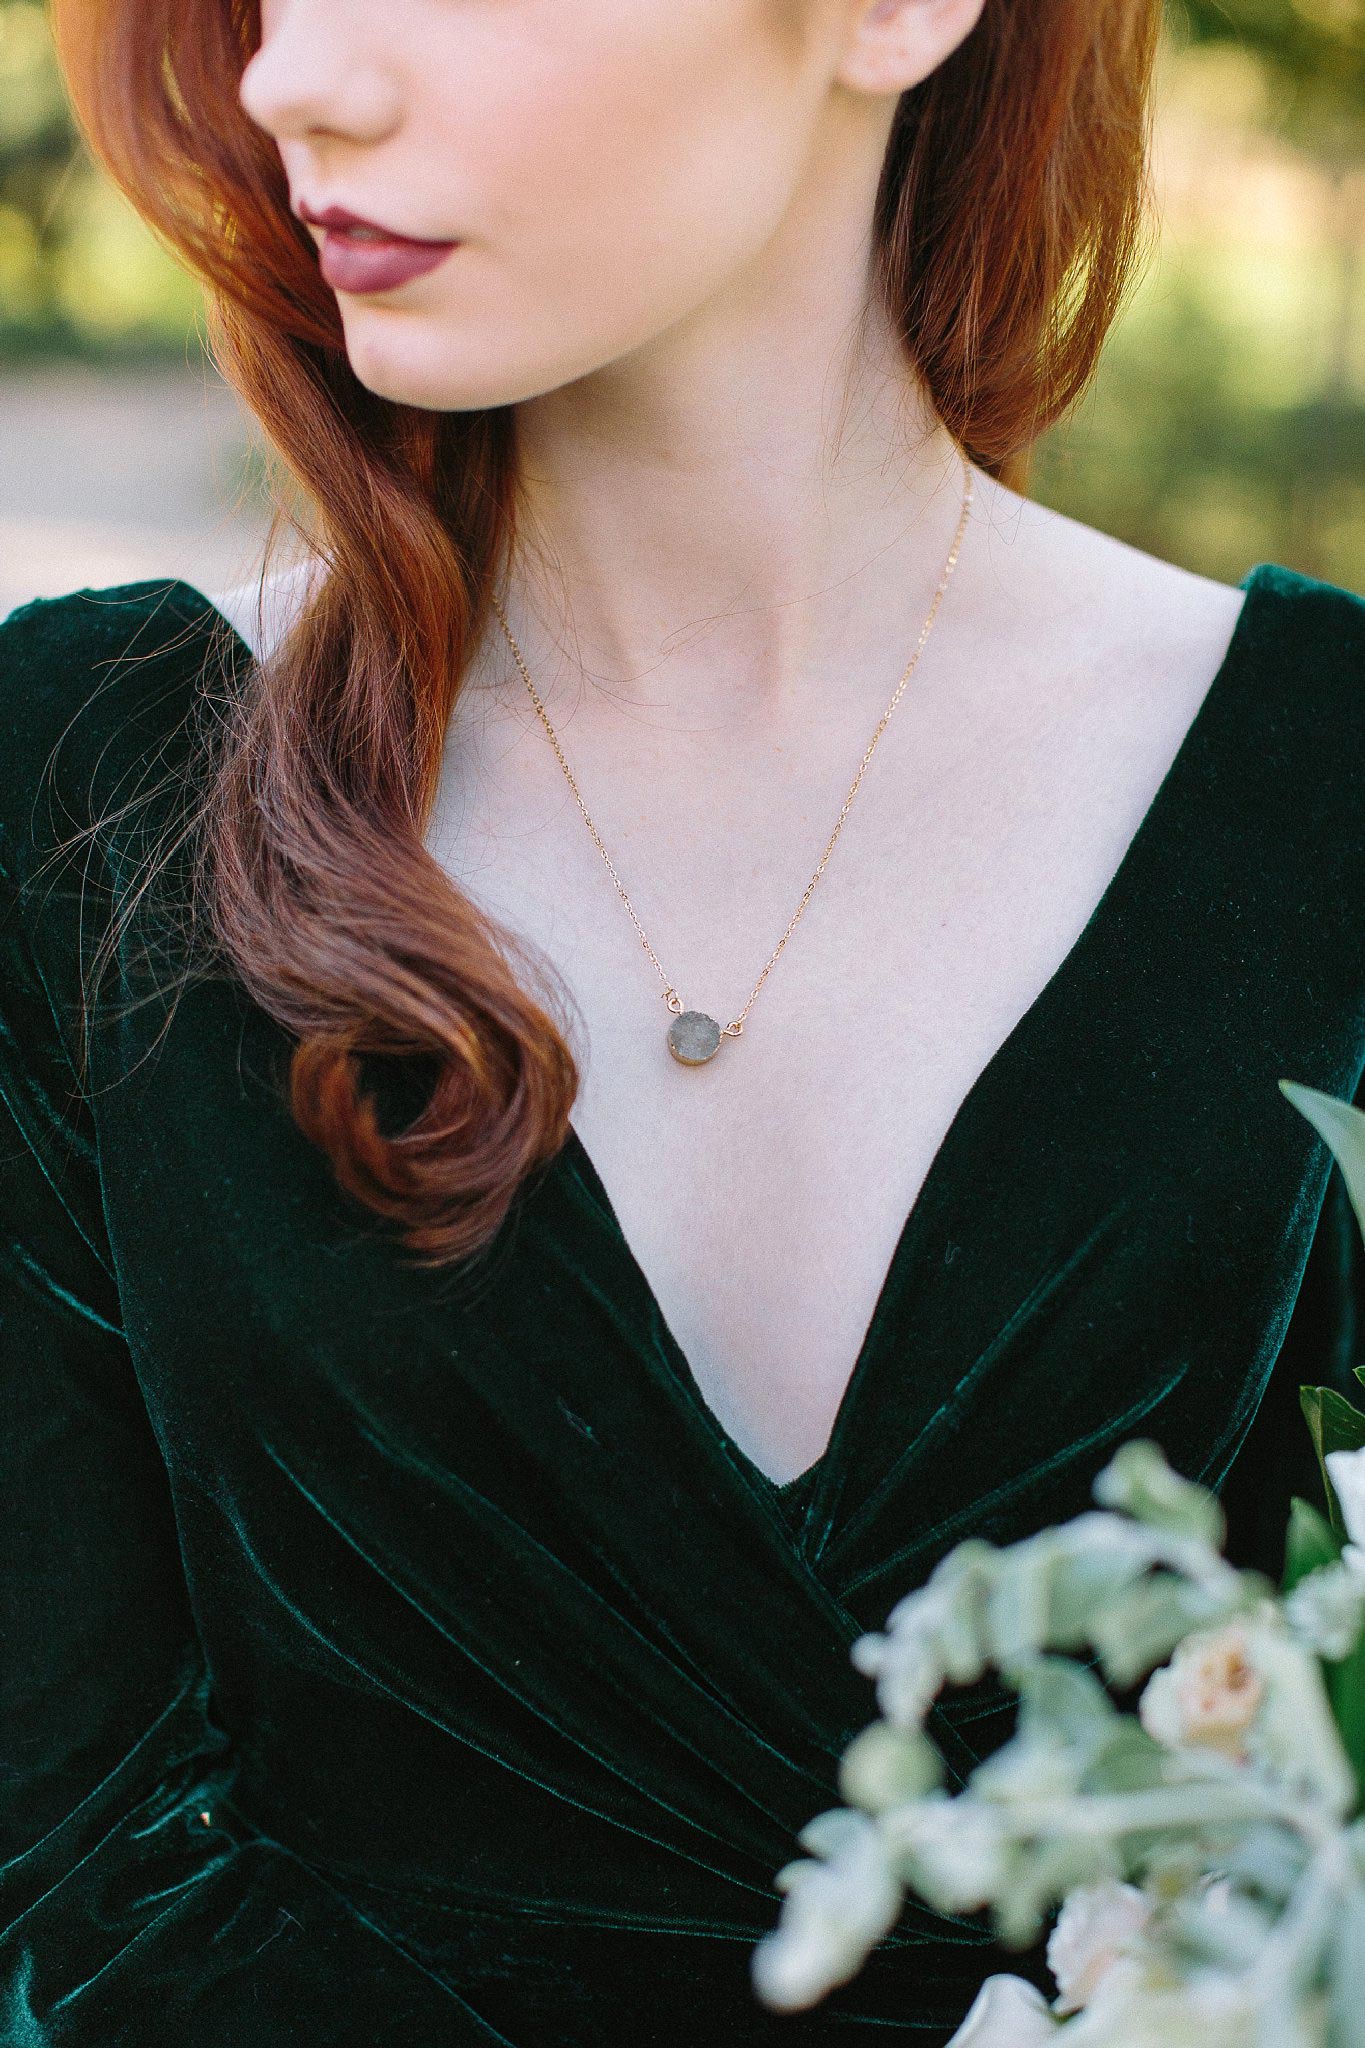 aristide mansfield wedding greenery dress with jewel necklace